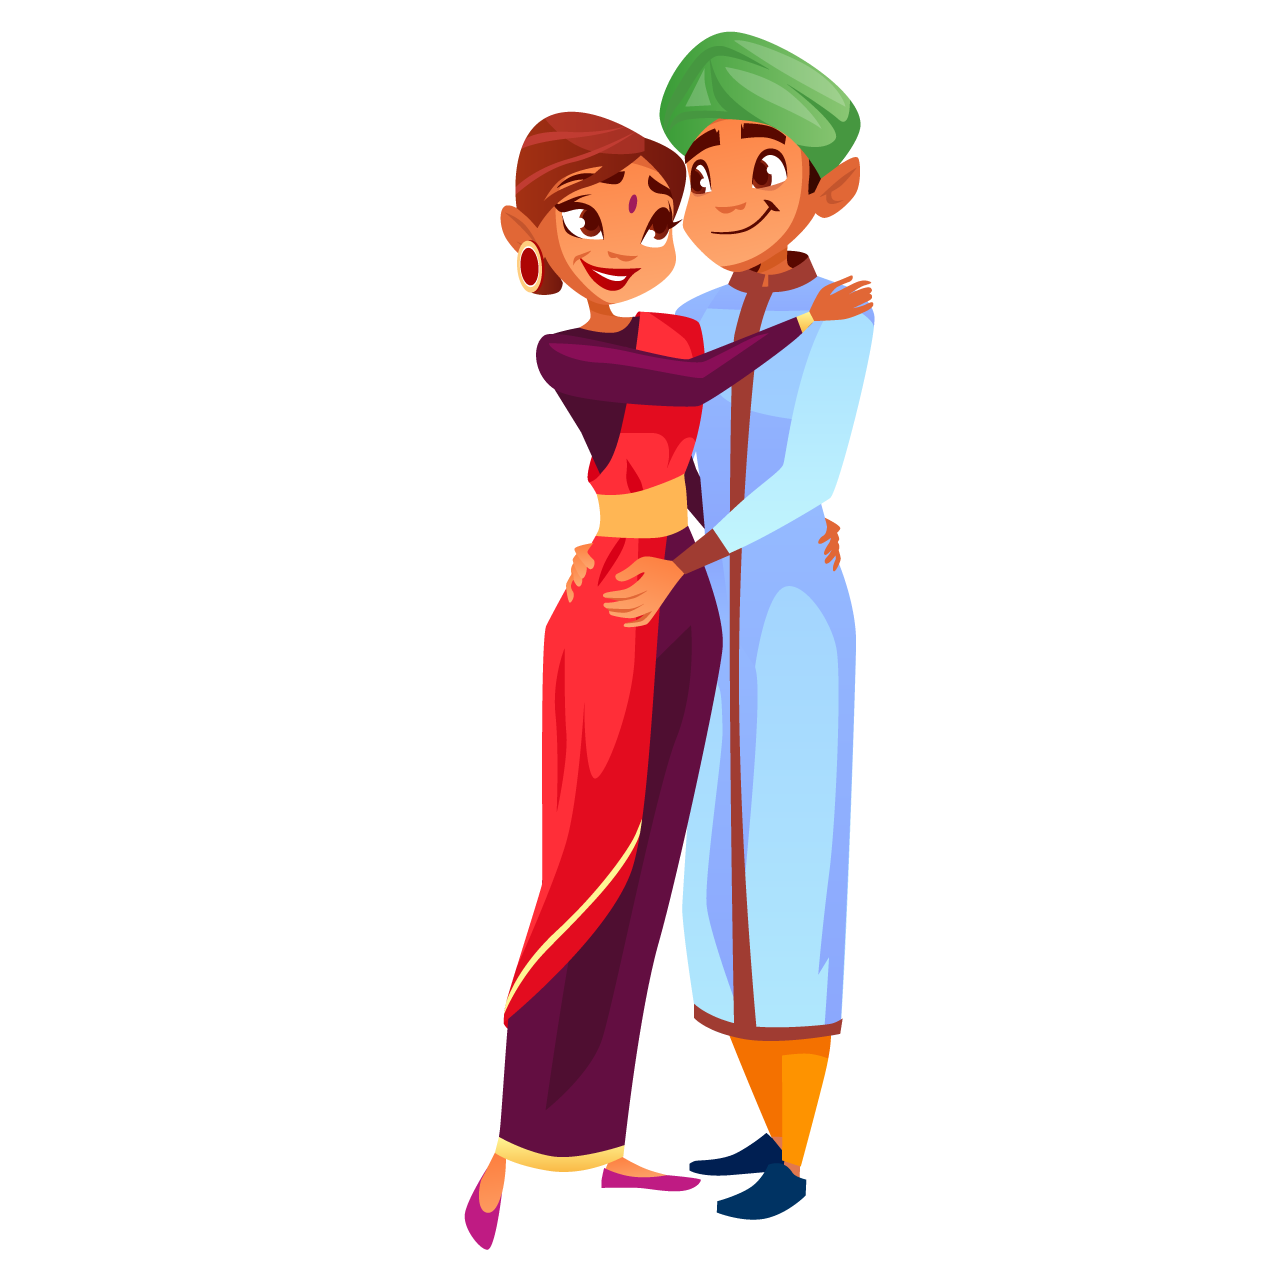 Indian wedding couples hugging expressing cartoon illustration image